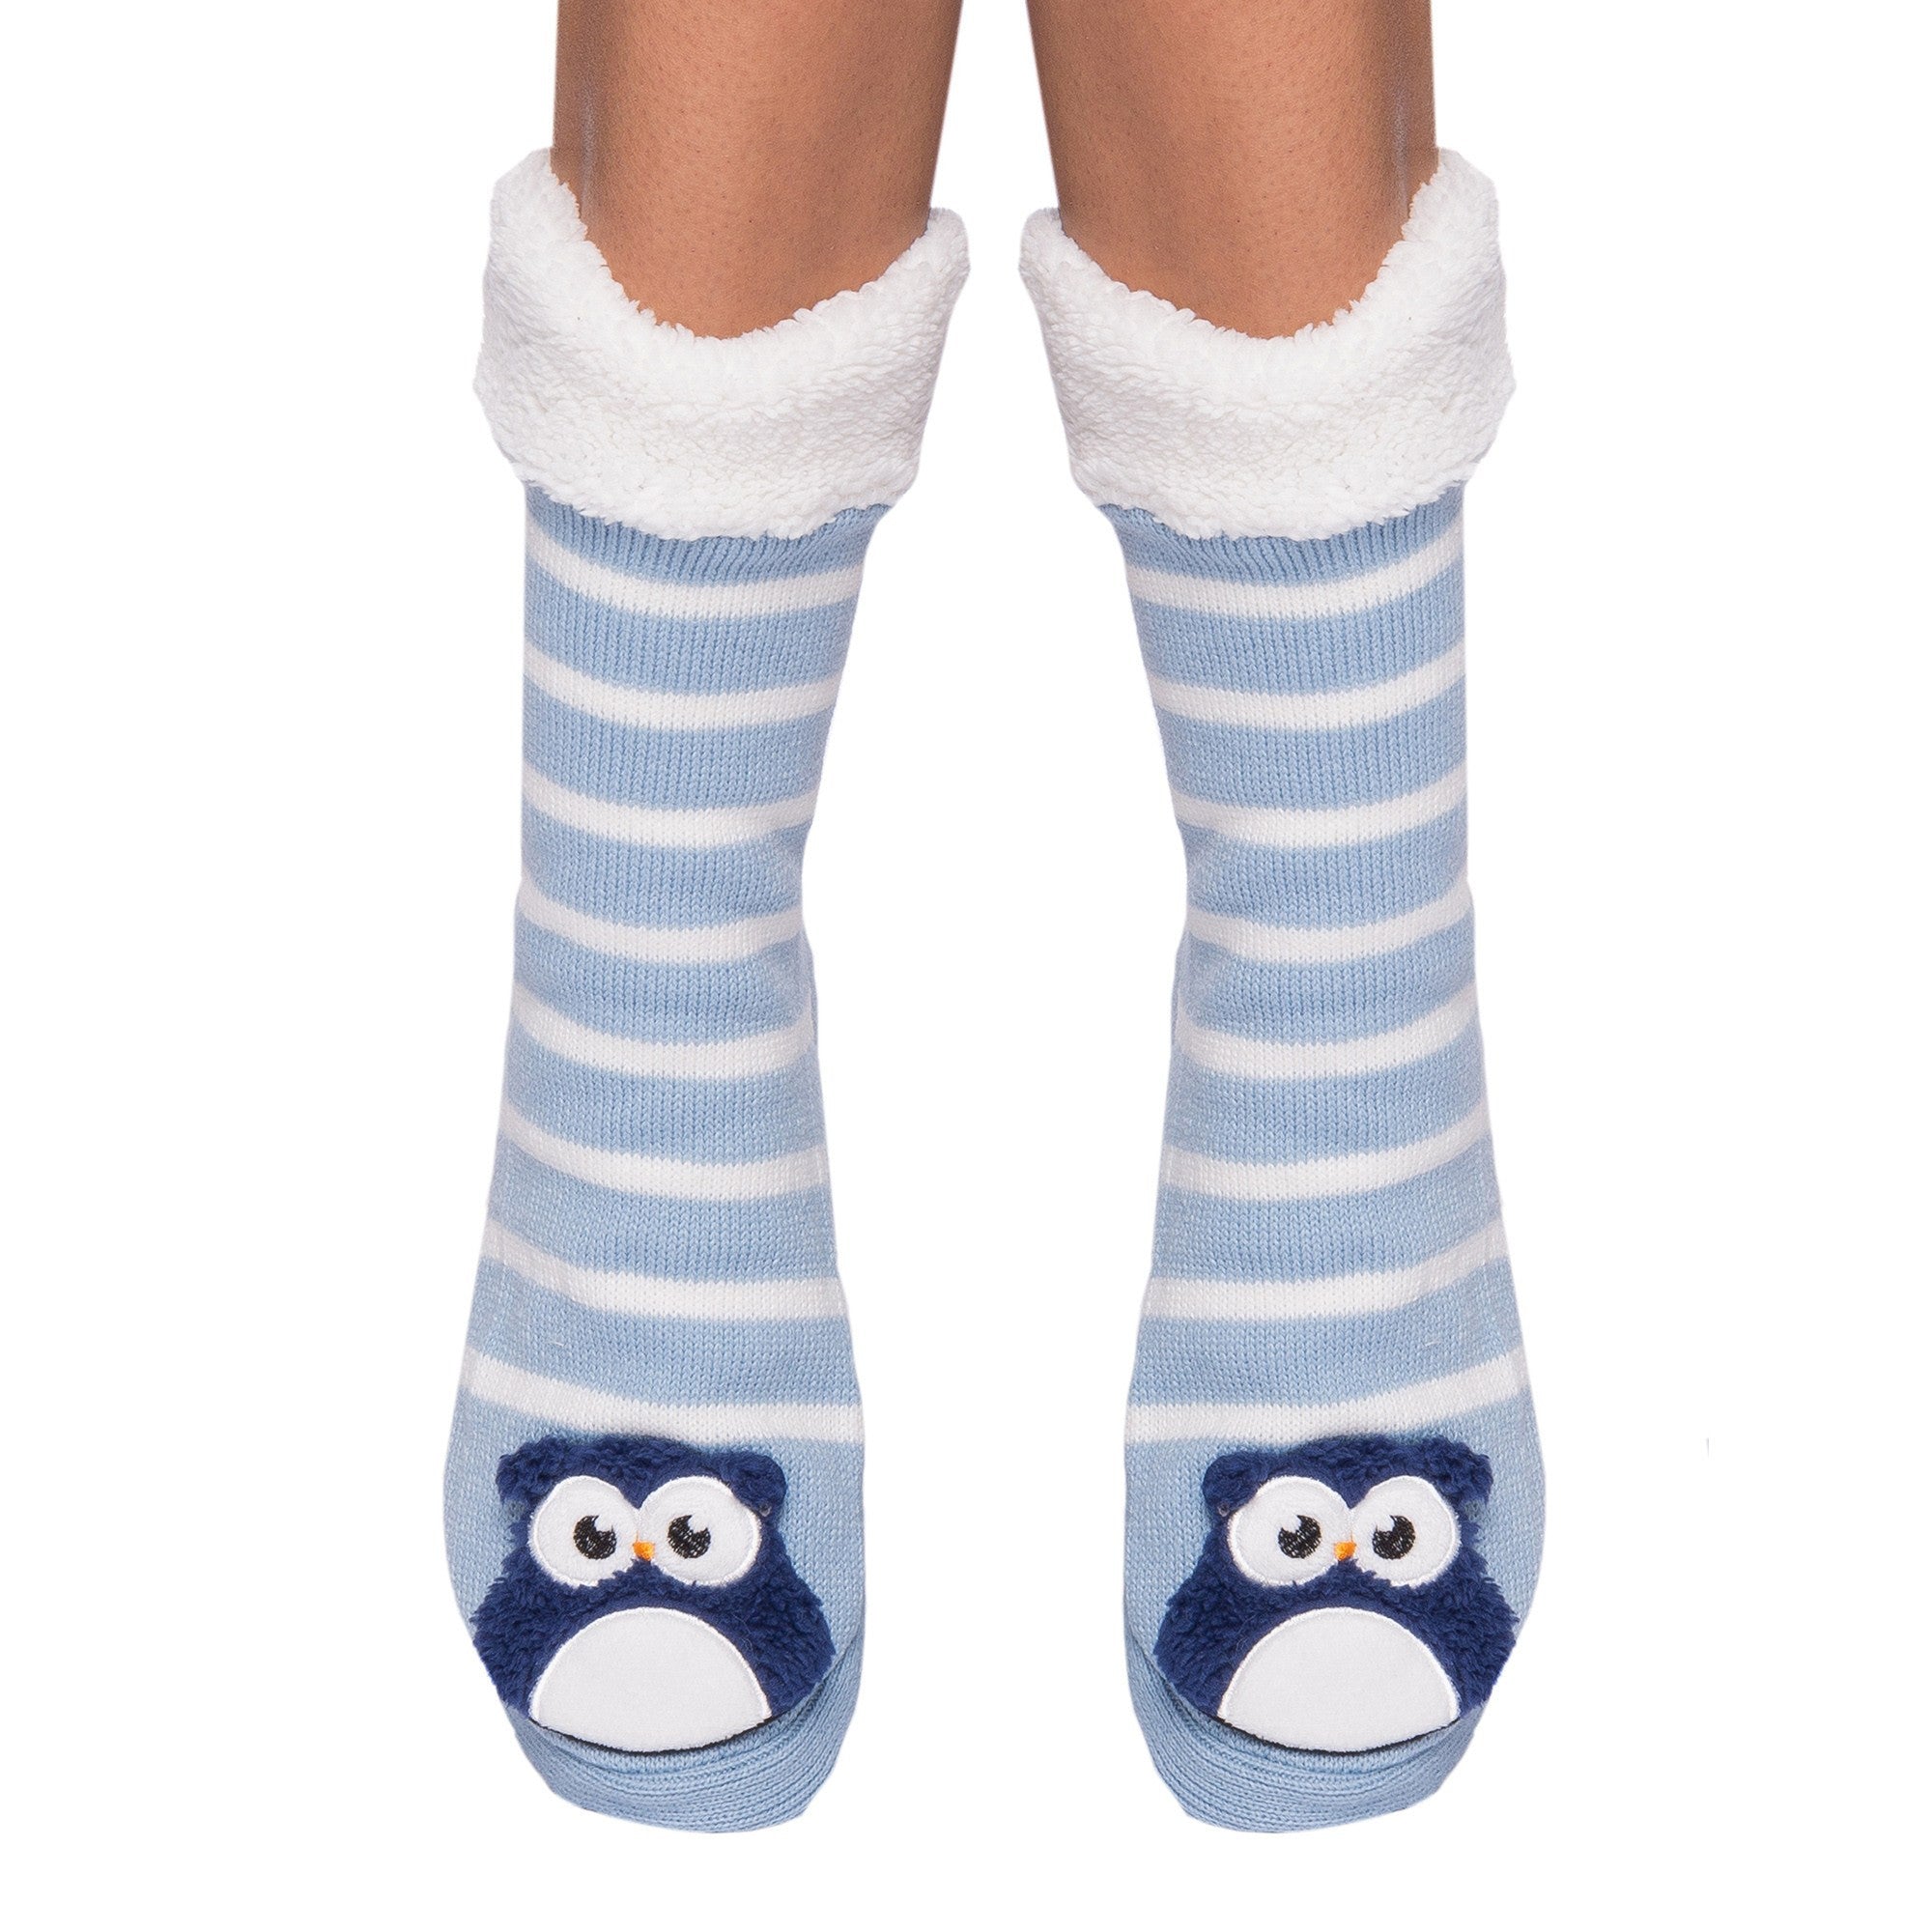 Women's Cute Knit Animal Face Slipper Socks